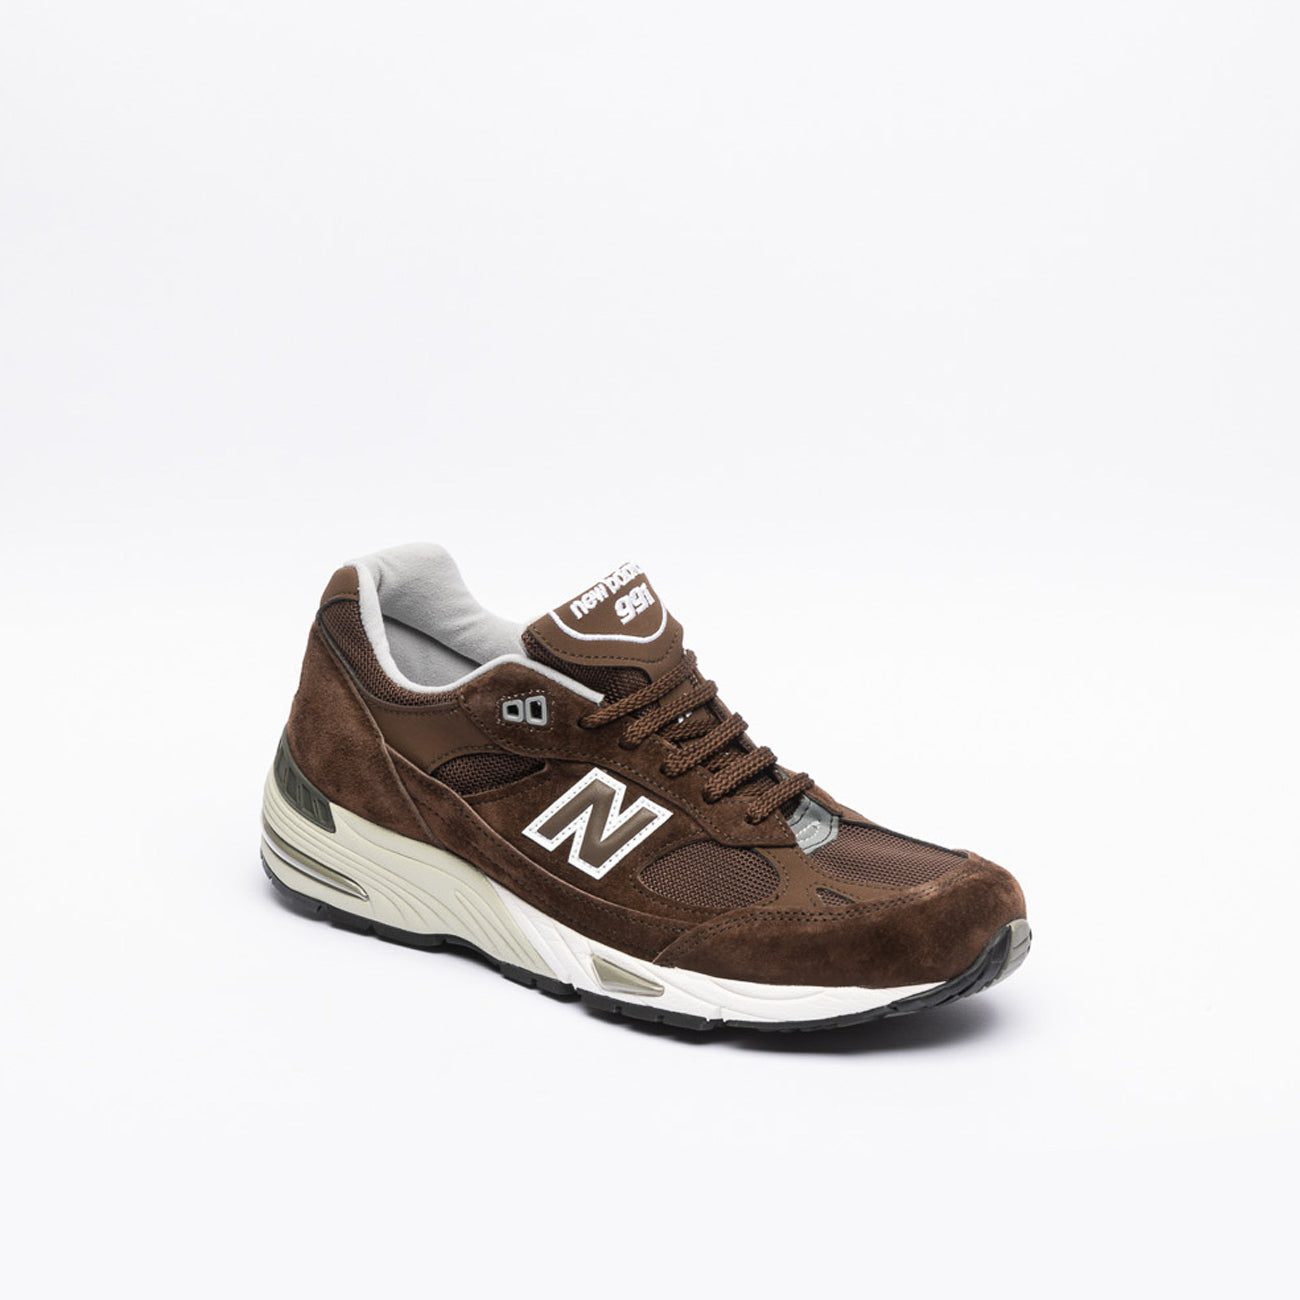 Sneaker New Balance 991v1 in camoscio marrone